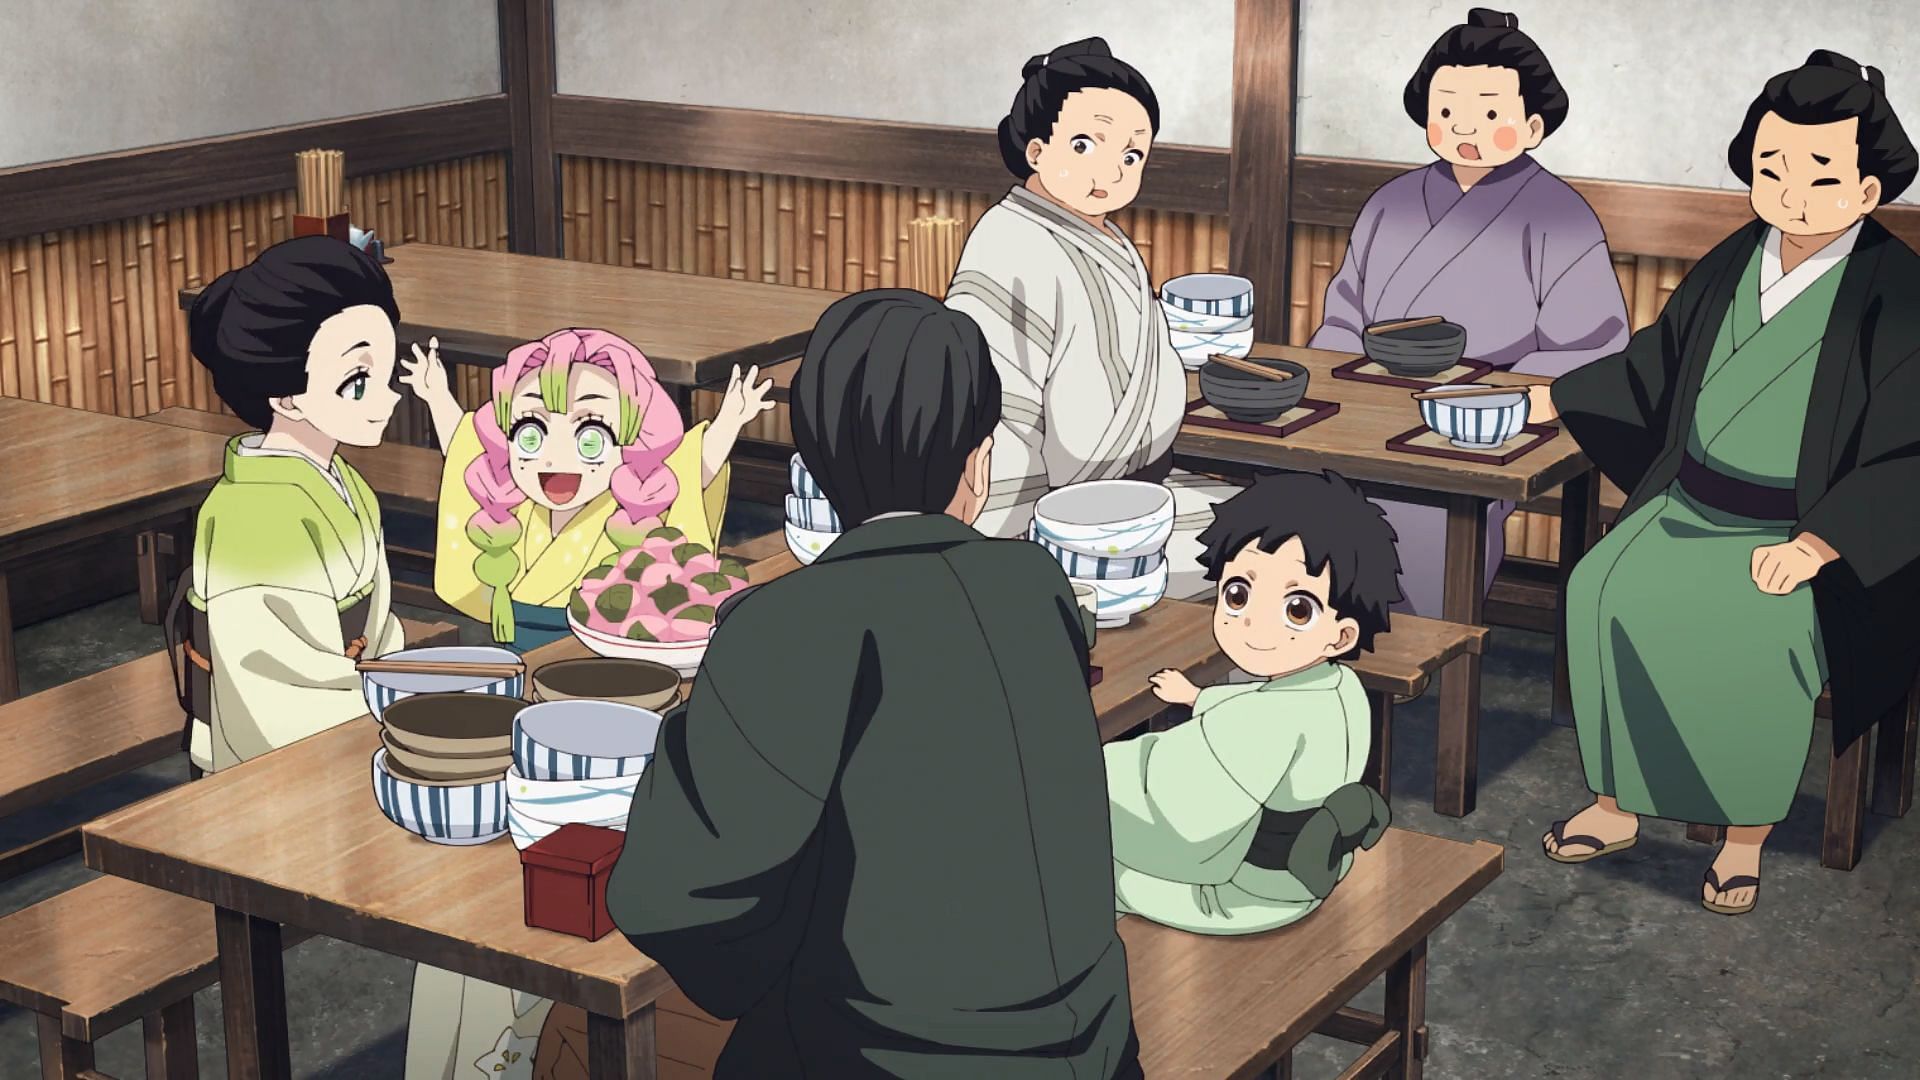 Child Mitsuri at the restaurant with her family (Image via Studio Ufotable)